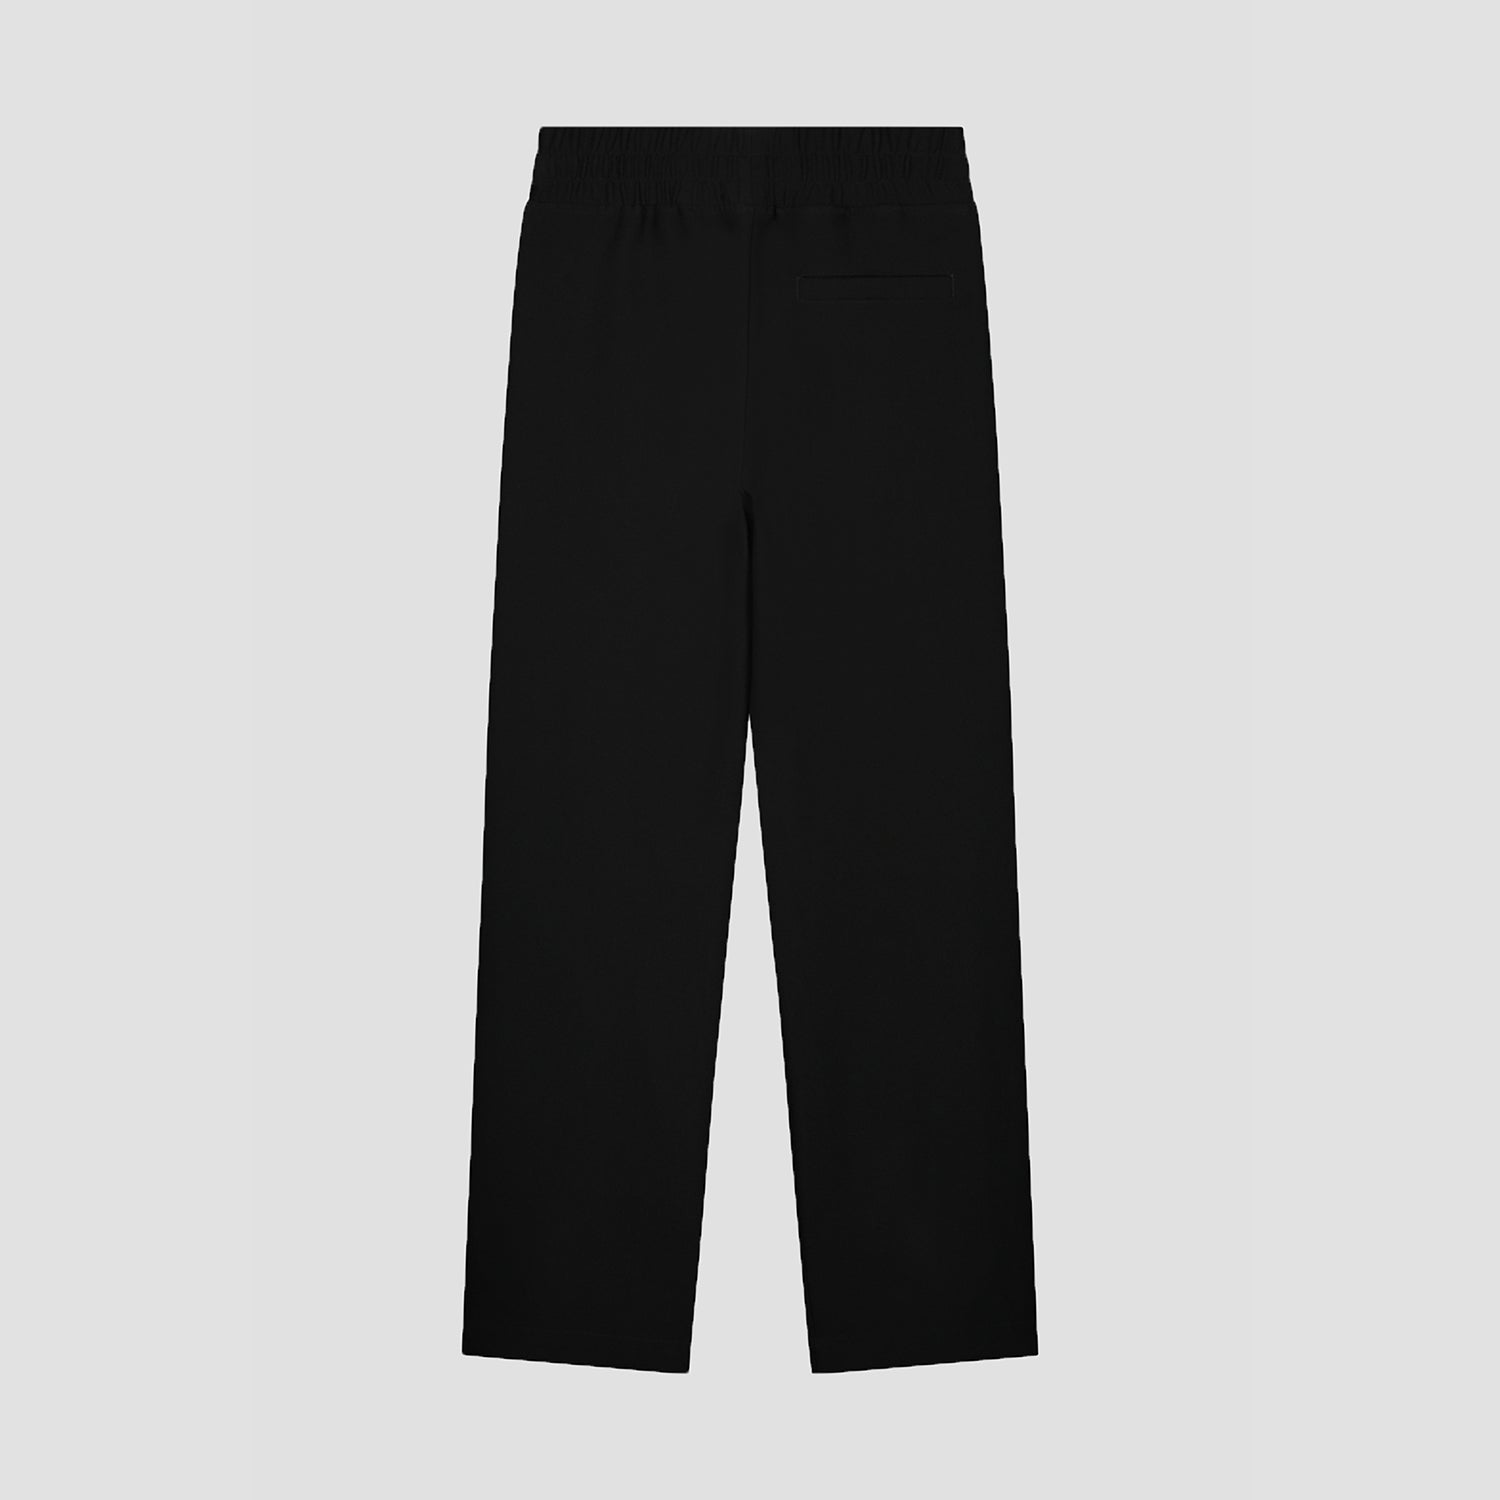 ØLÅF WMN Elasticated Pants - Black